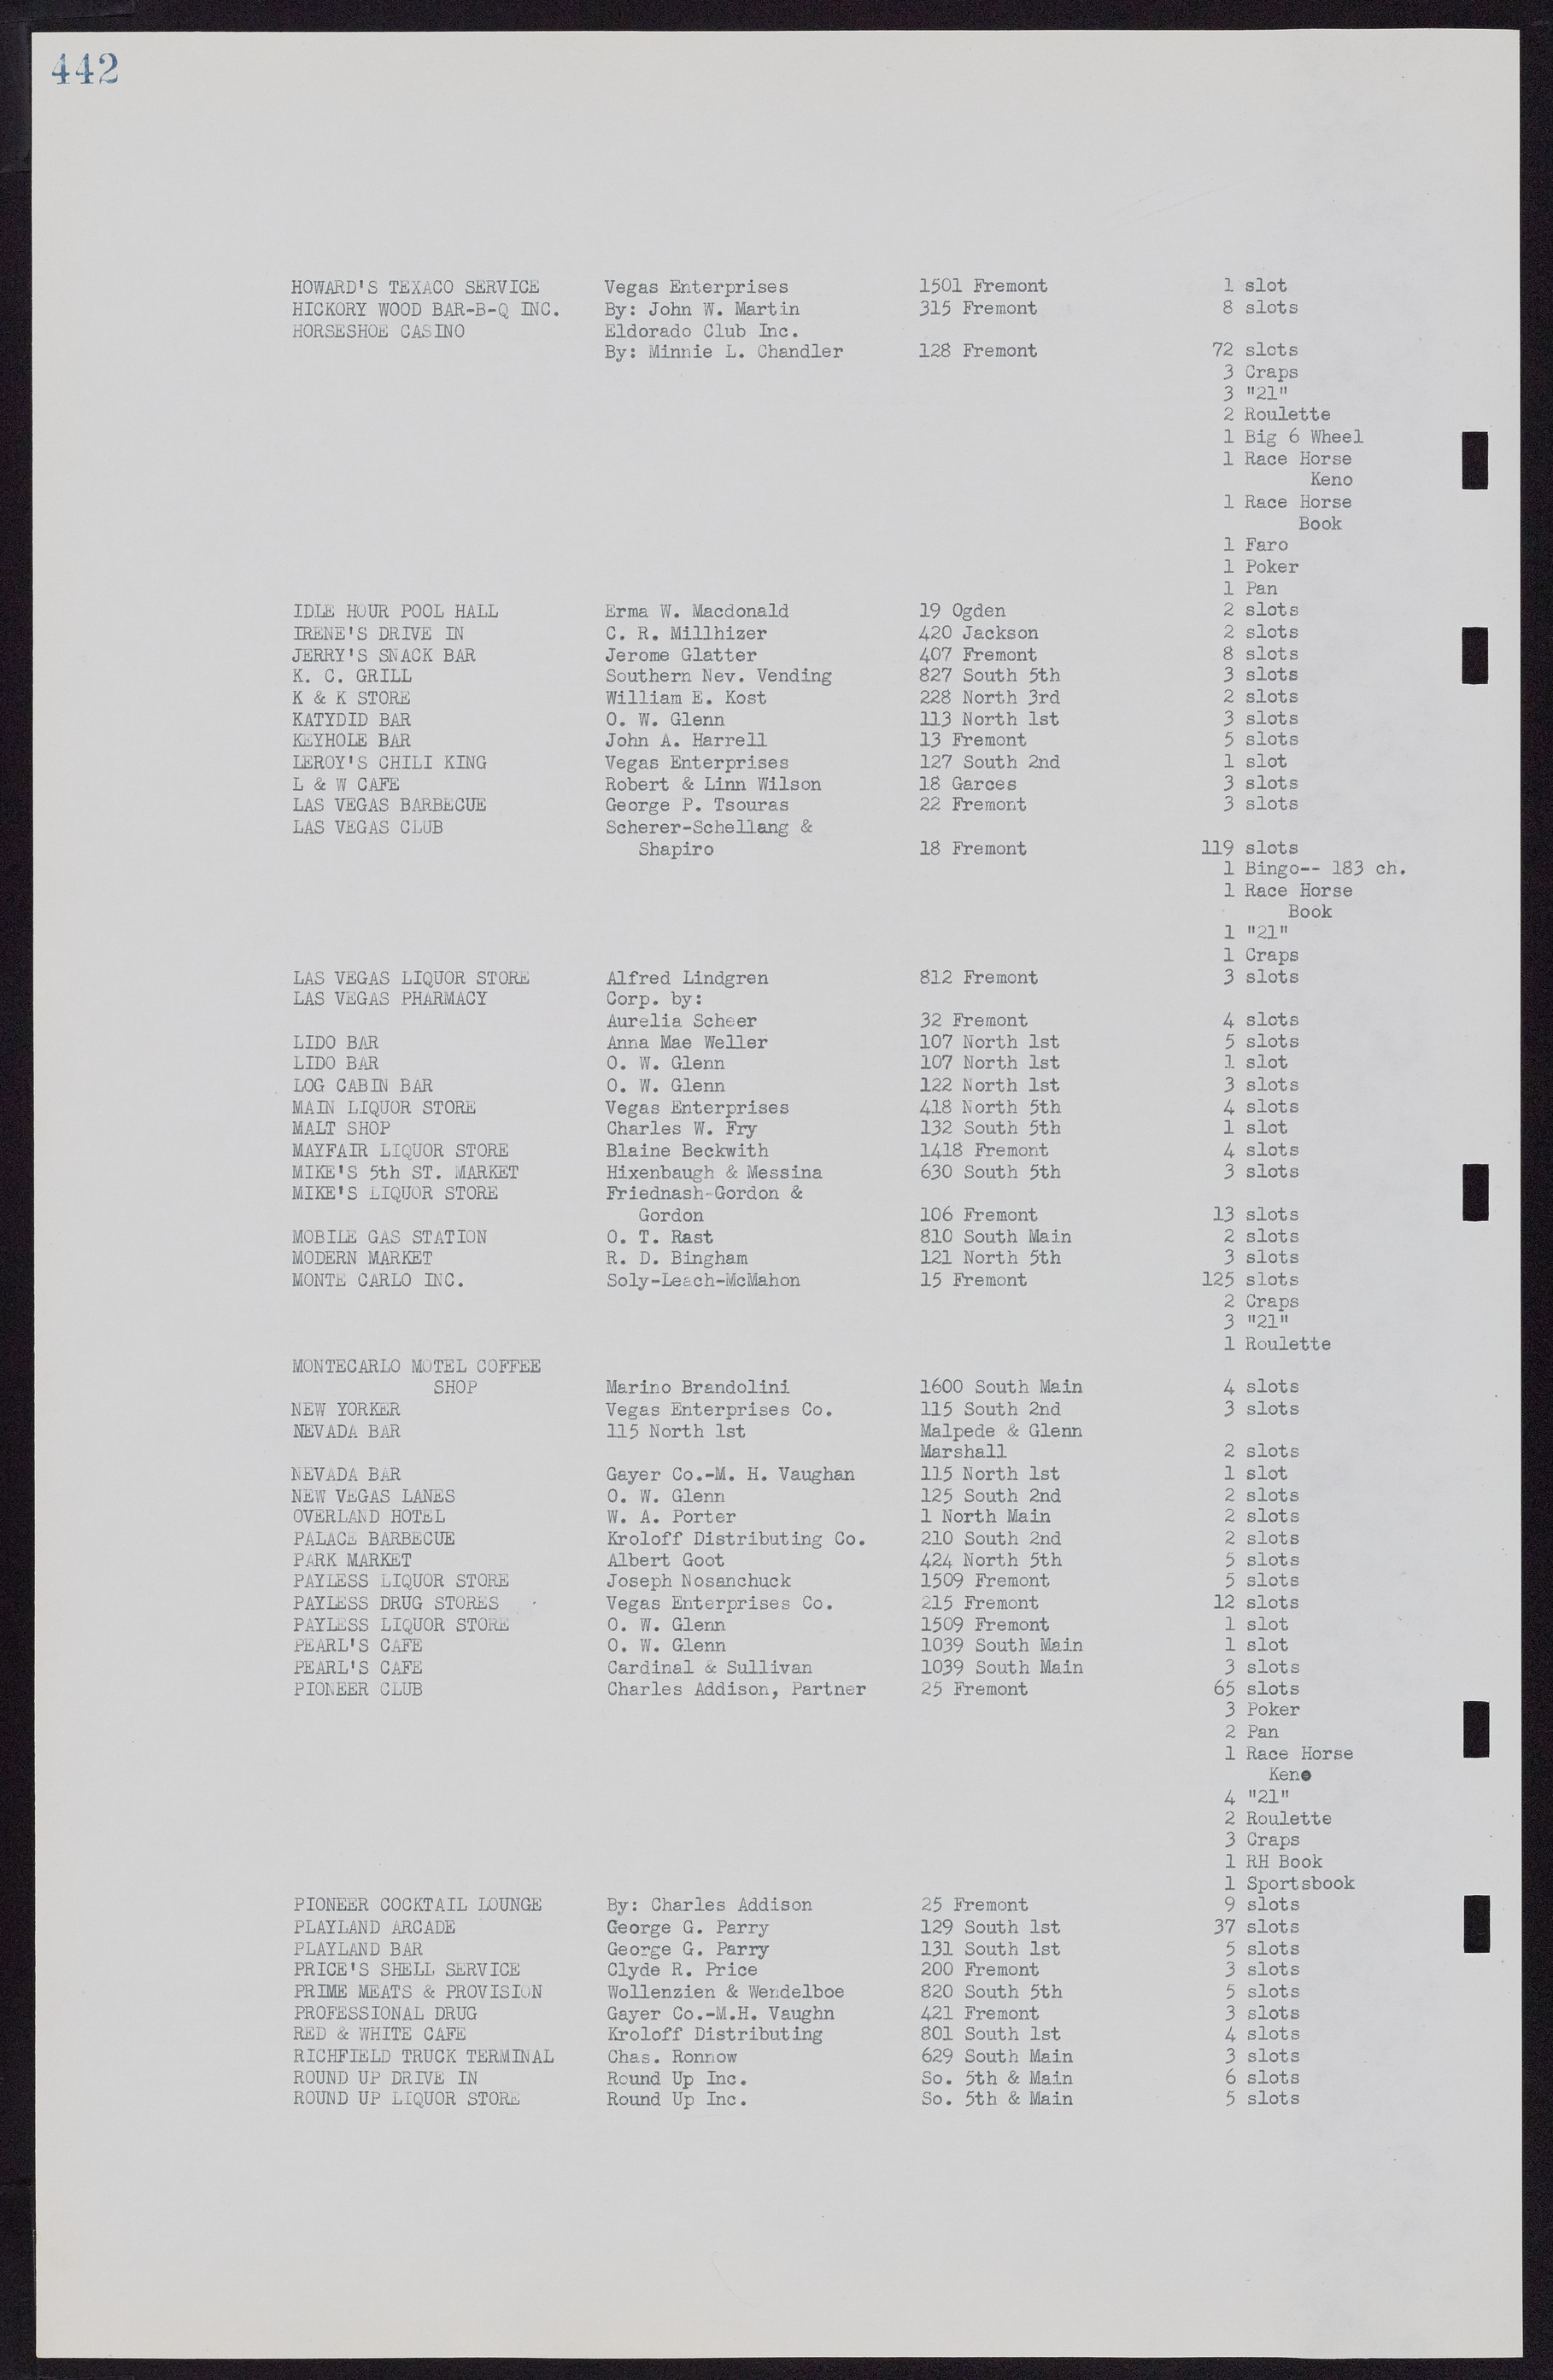 Las Vegas City Commission Minutes, November 7, 1949 to May 21, 1952, lvc000007-458